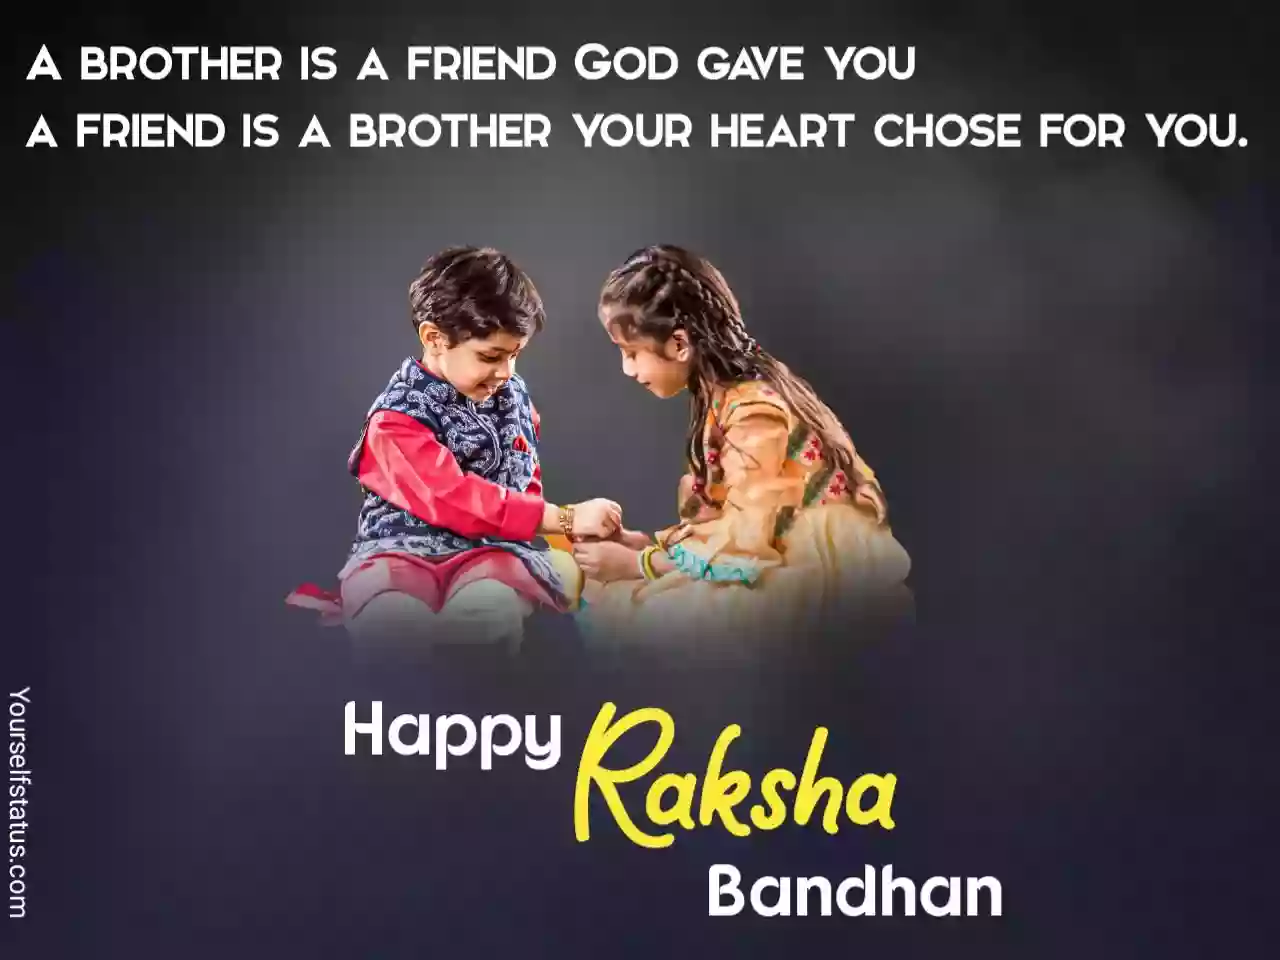 Raksha bandhan wishes for brother in English